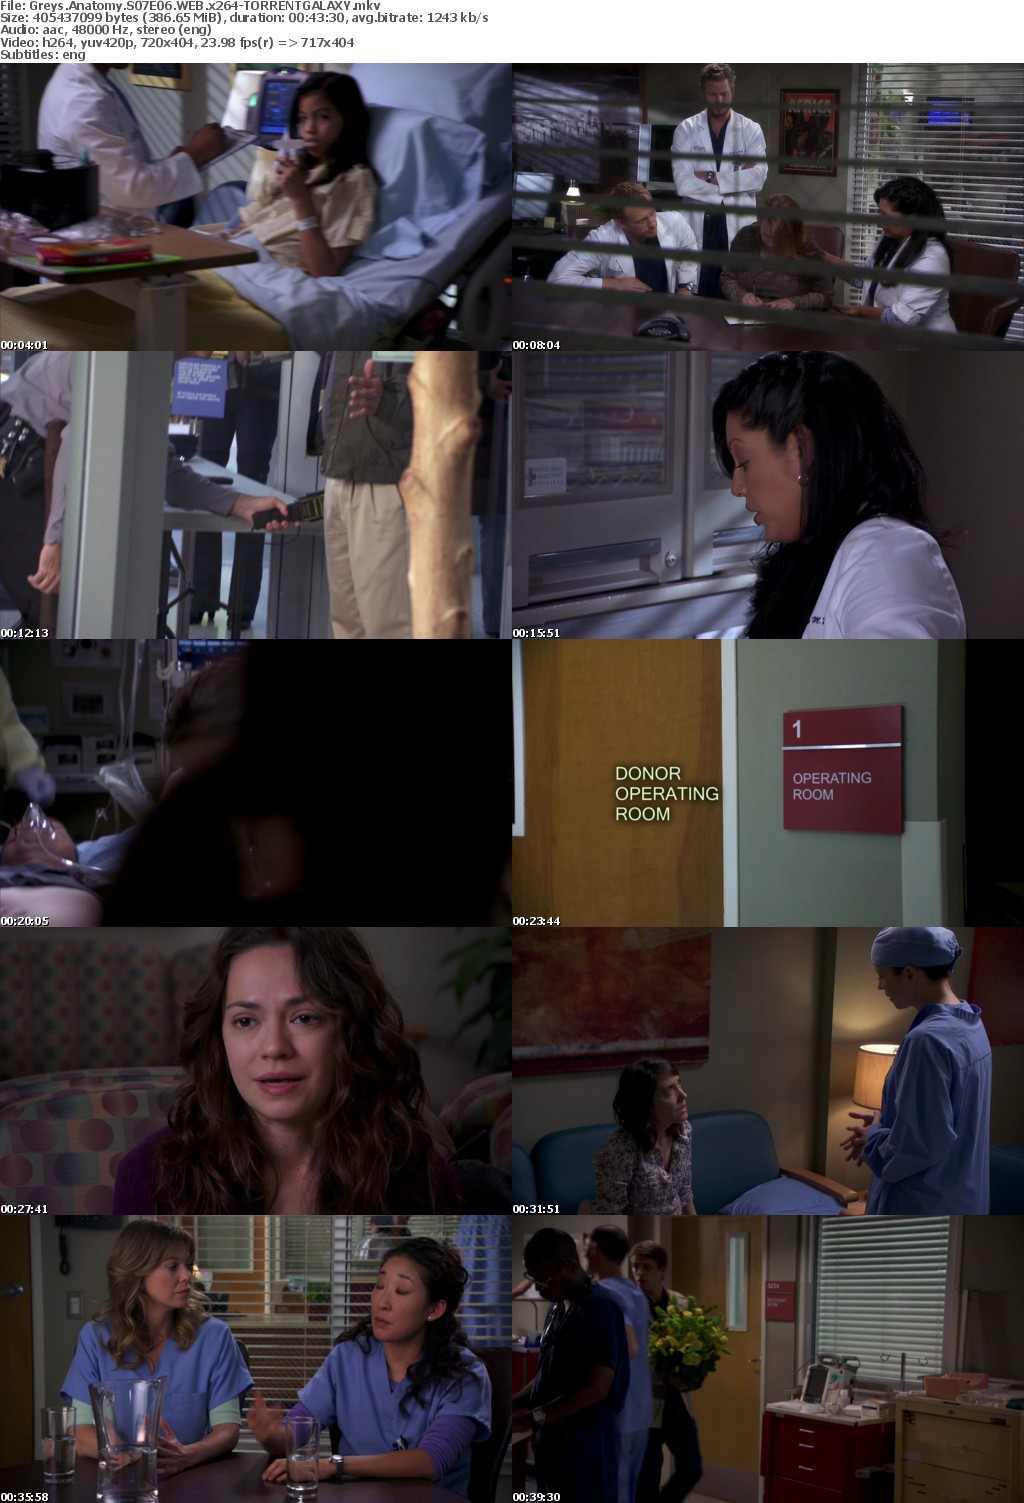 Greys Anatomy S07E06 WEB x264-GALAXY